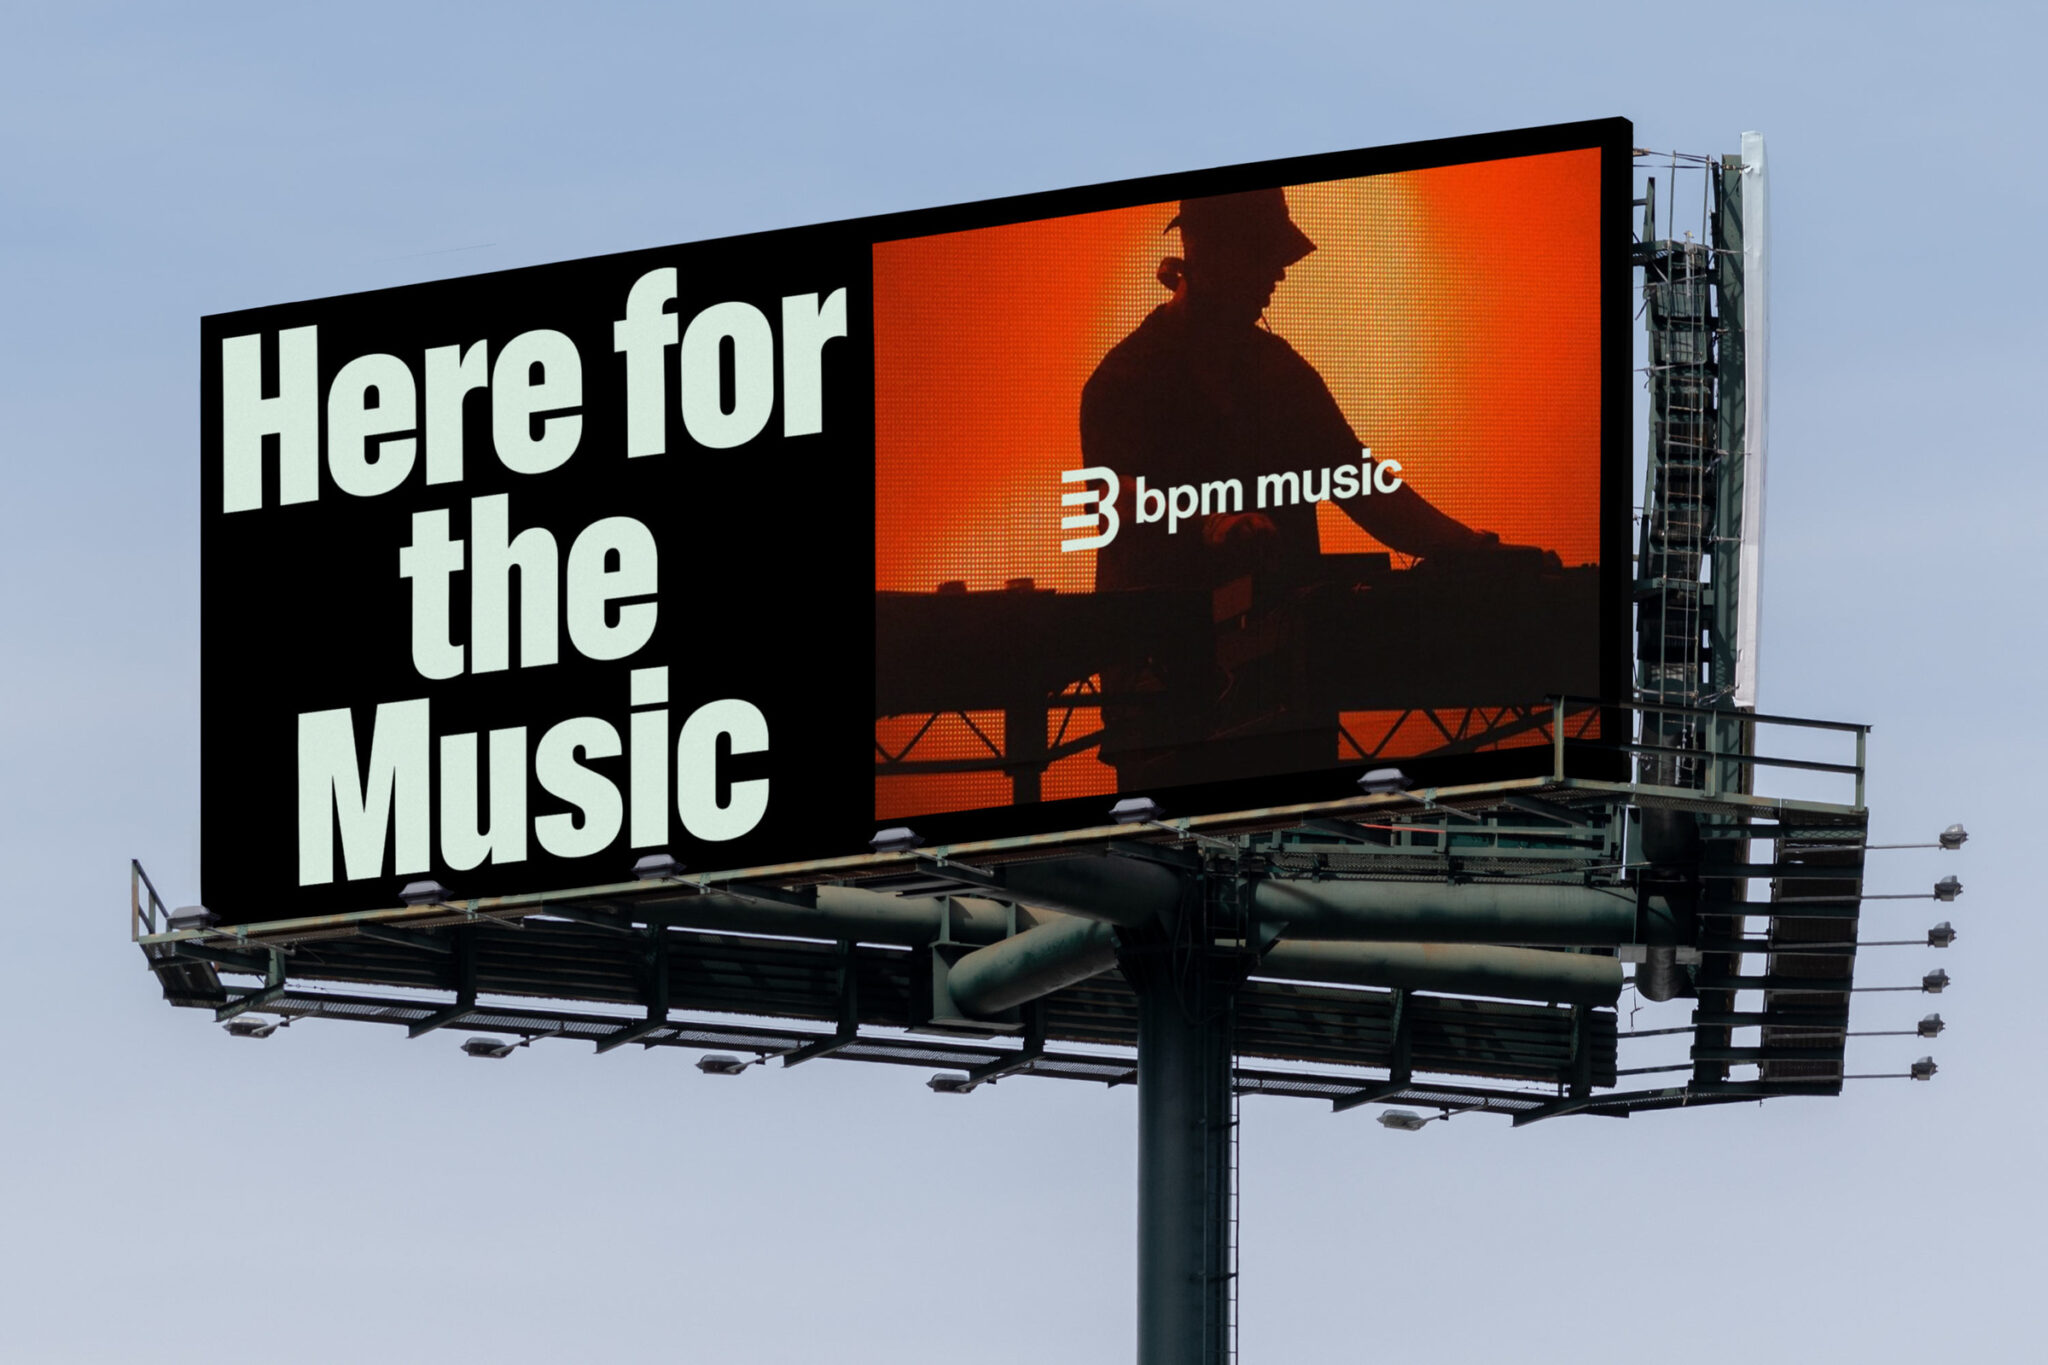 BPM Music website